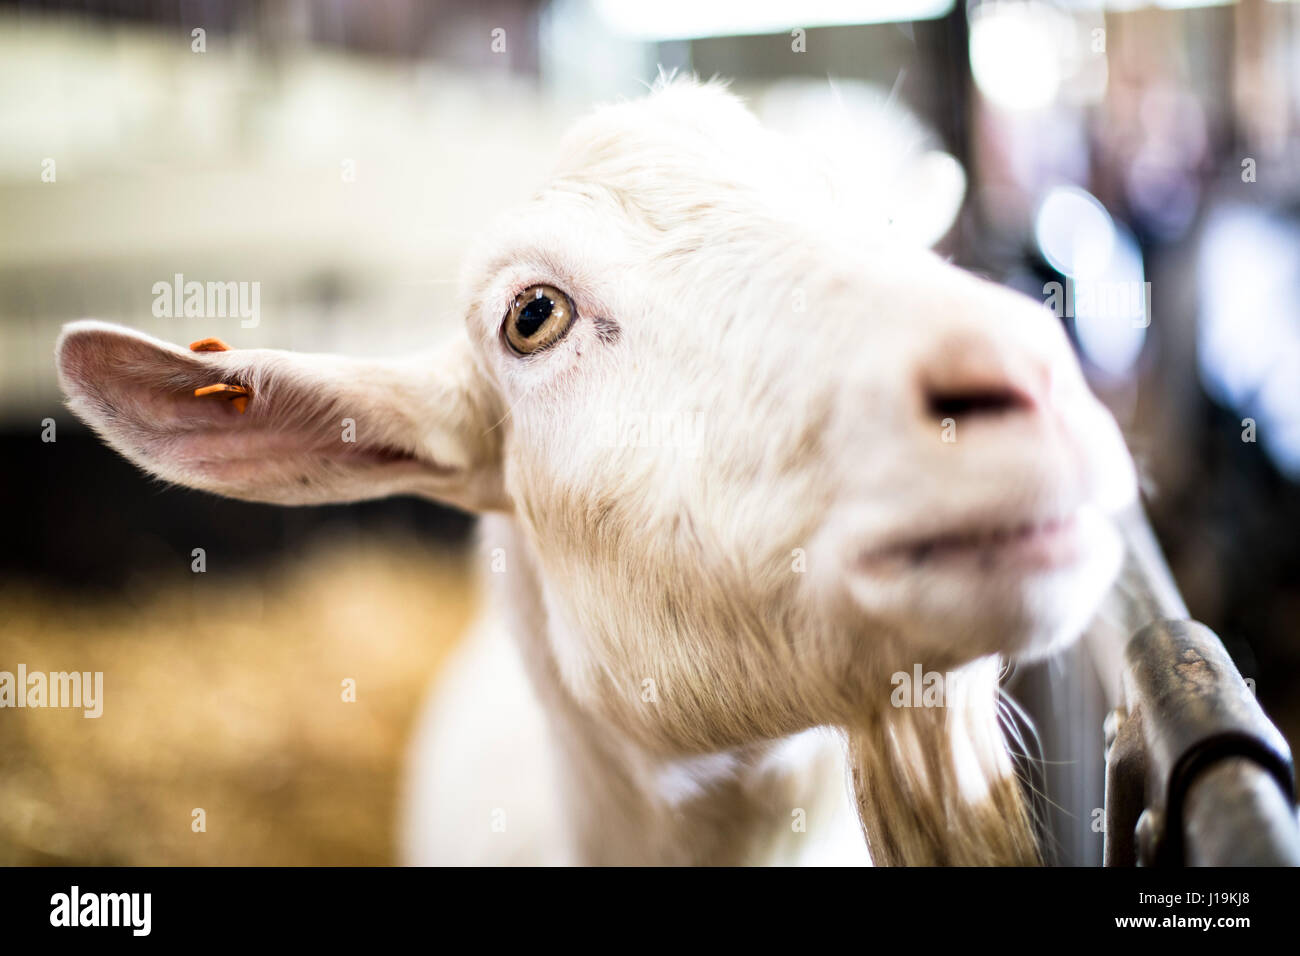 Close up photographs of goats. Stock Photo